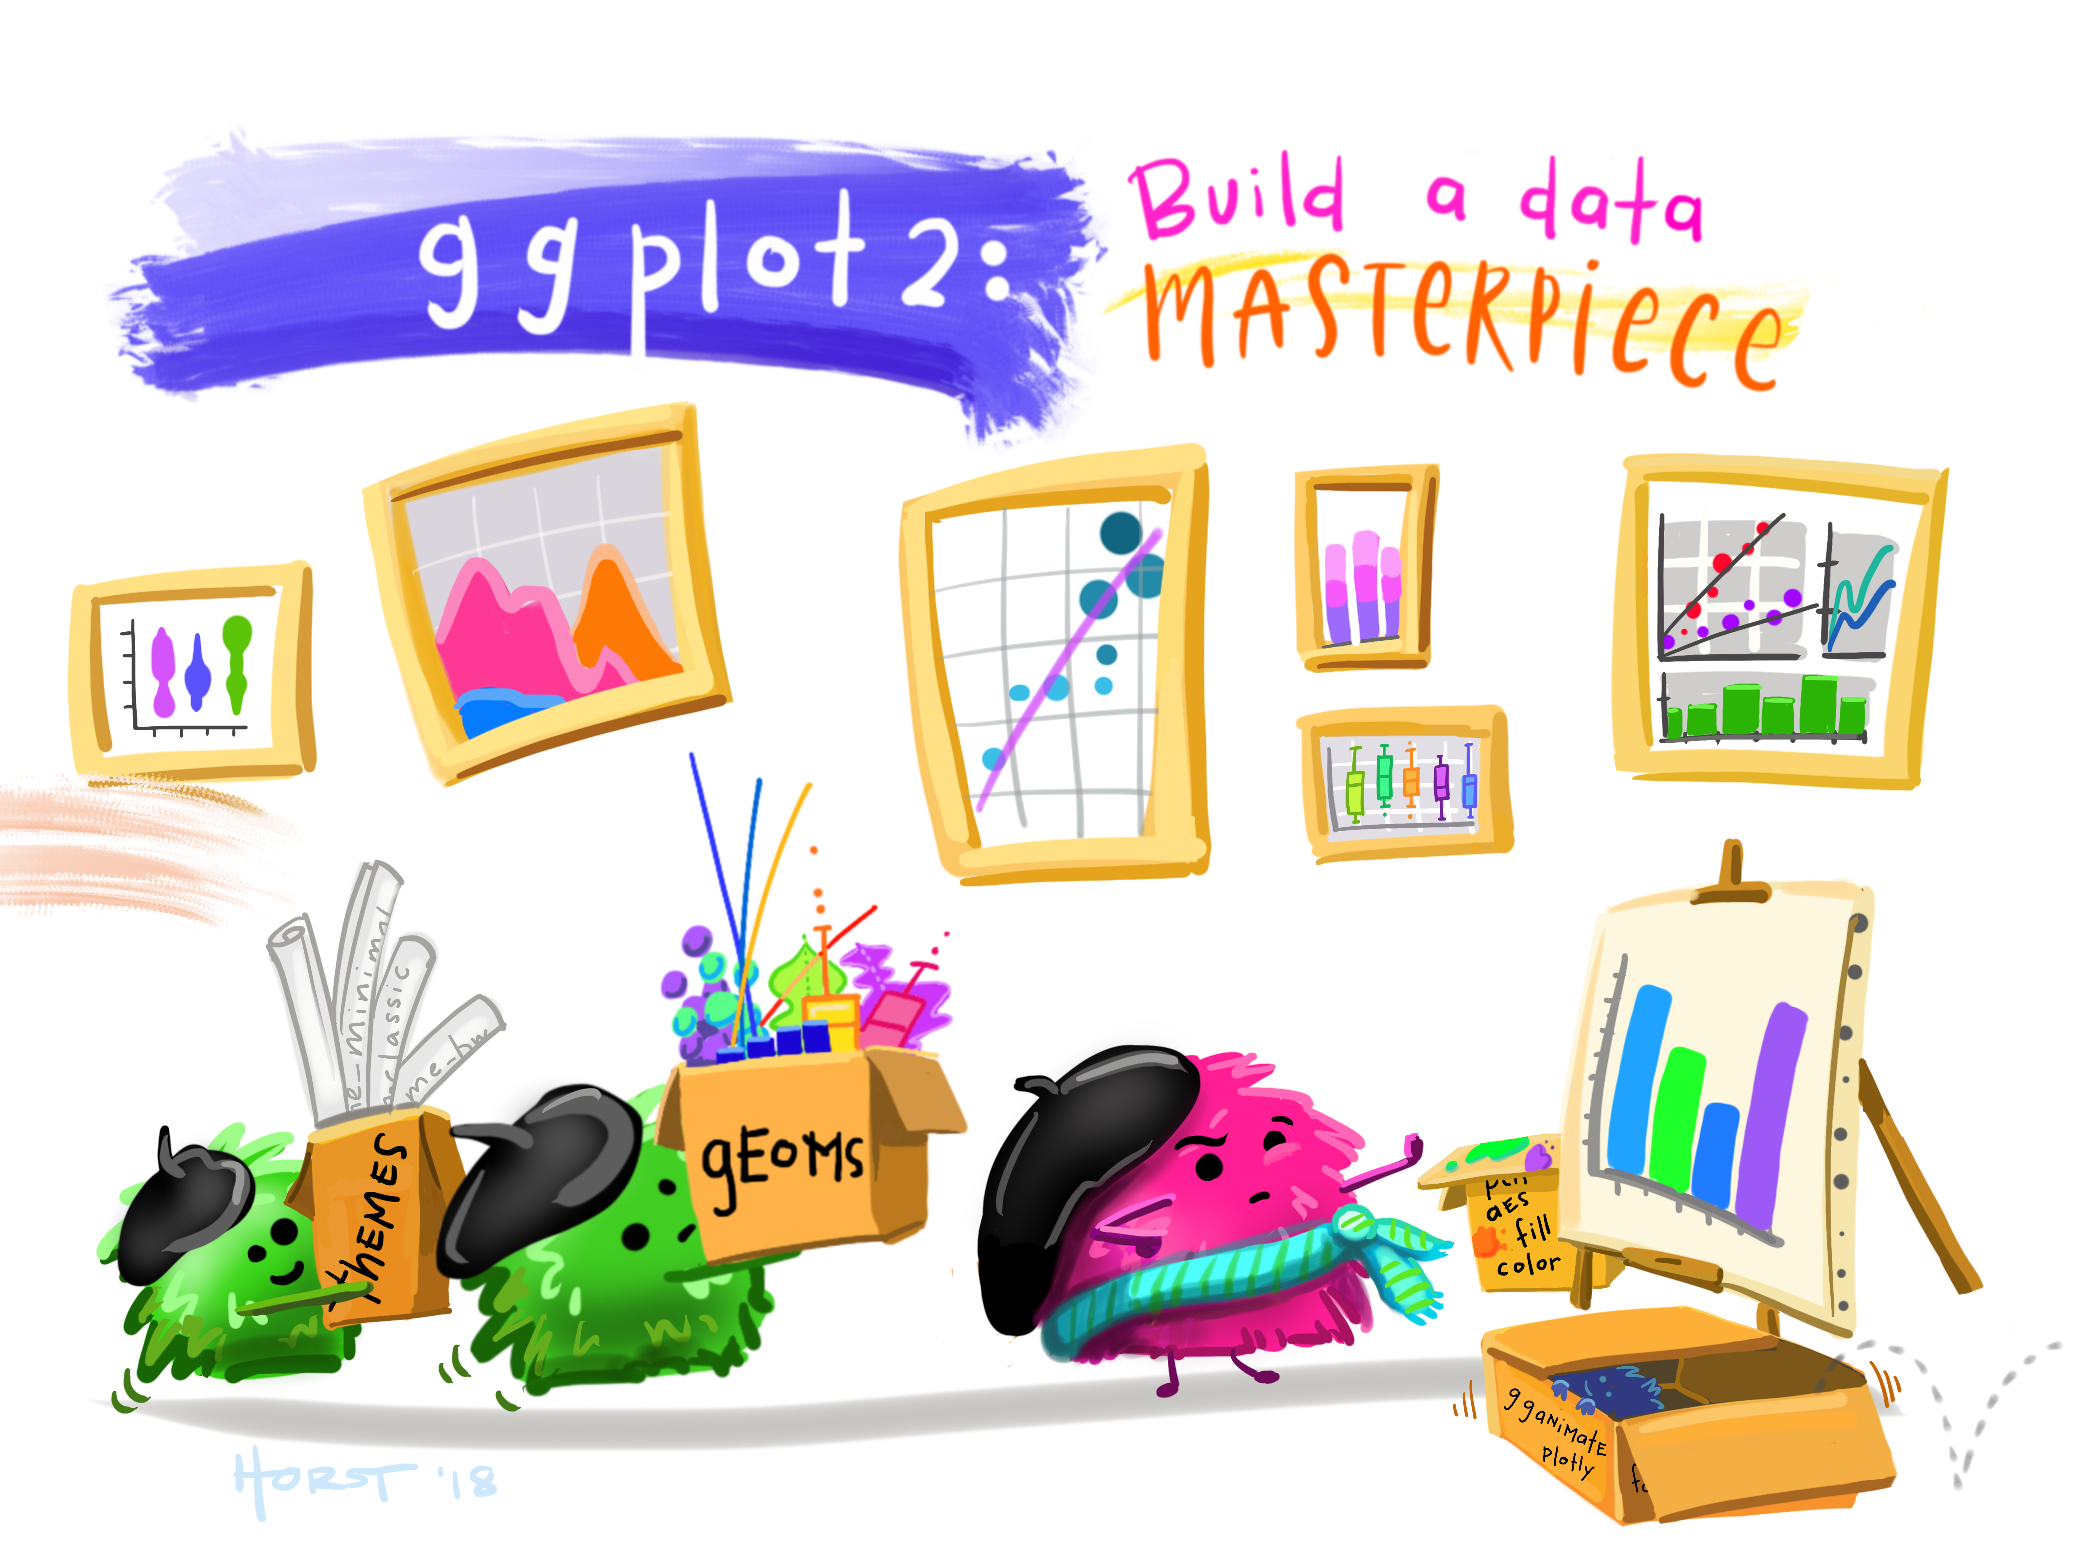 ggplot2 masterpiece. Source: [Allison Horst data science and stats illustrations](https://github.com/allisonhorst/stats-illustrations)